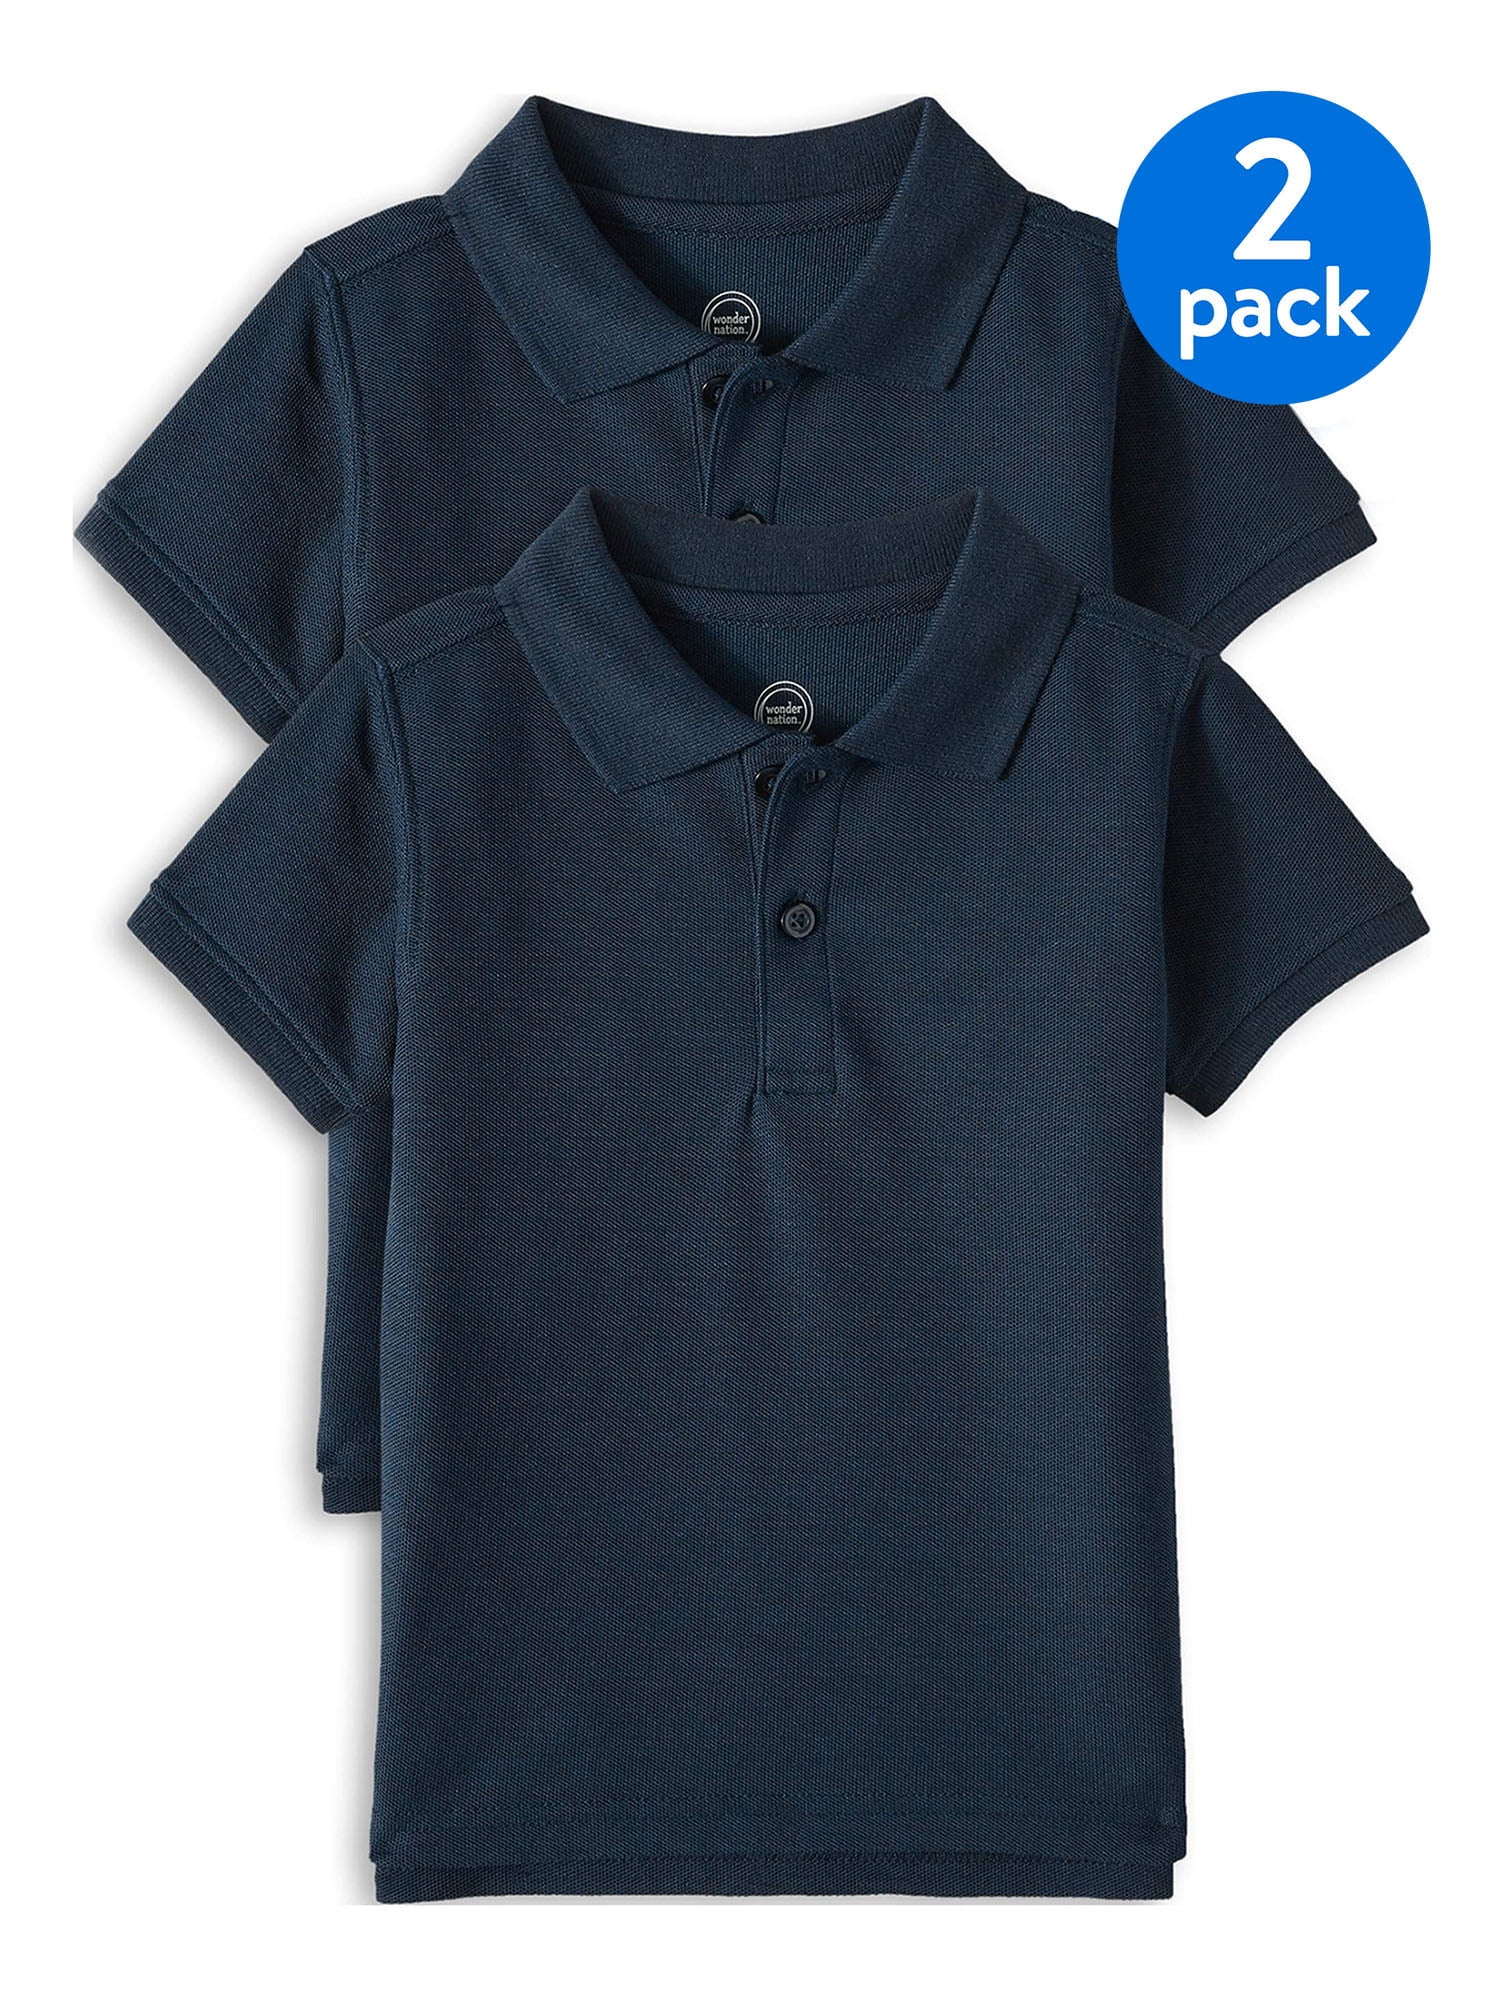 Boys School 2 Pack Short Sleeve Shirts Light Blue sizes Age 3-18 Uniform Shirt 